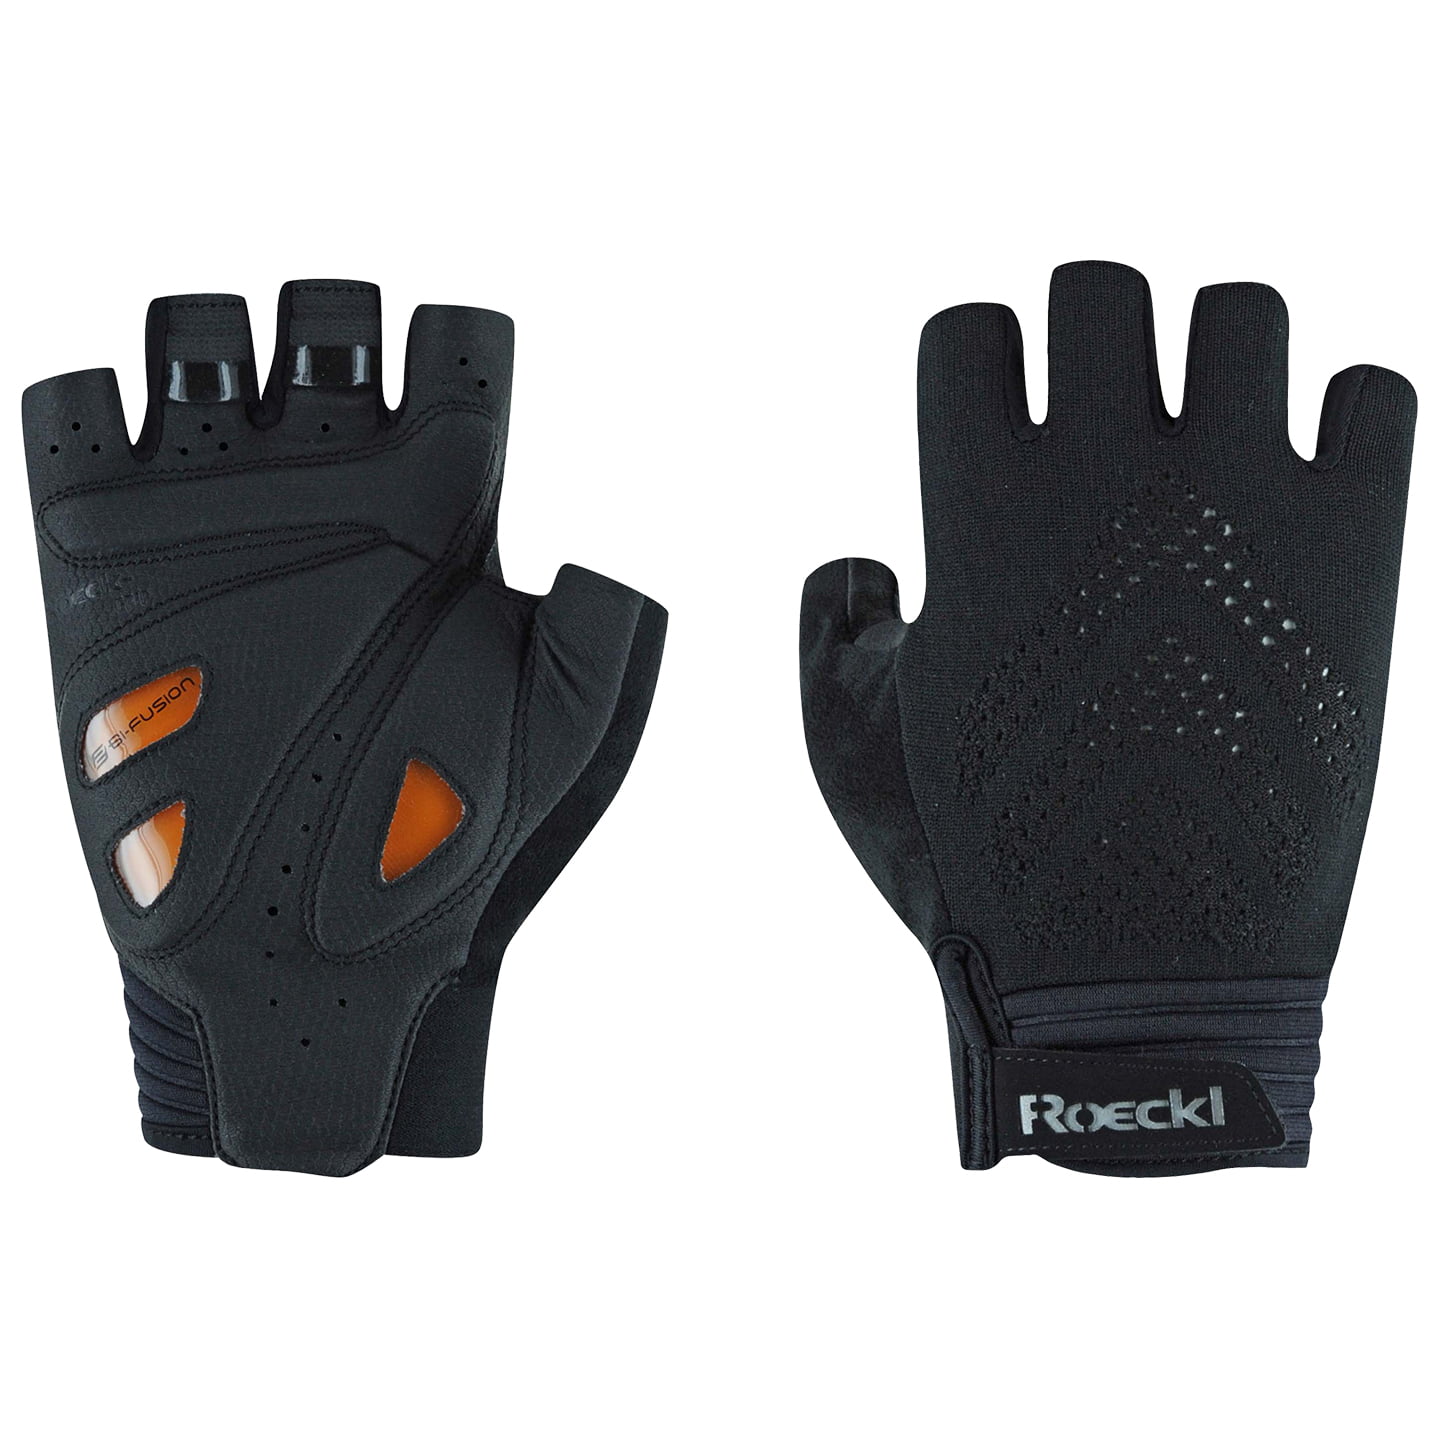 ROECKL Inverness Gloves Cycling Gloves, for men, size 10,5, Bike gloves, Bike clothing